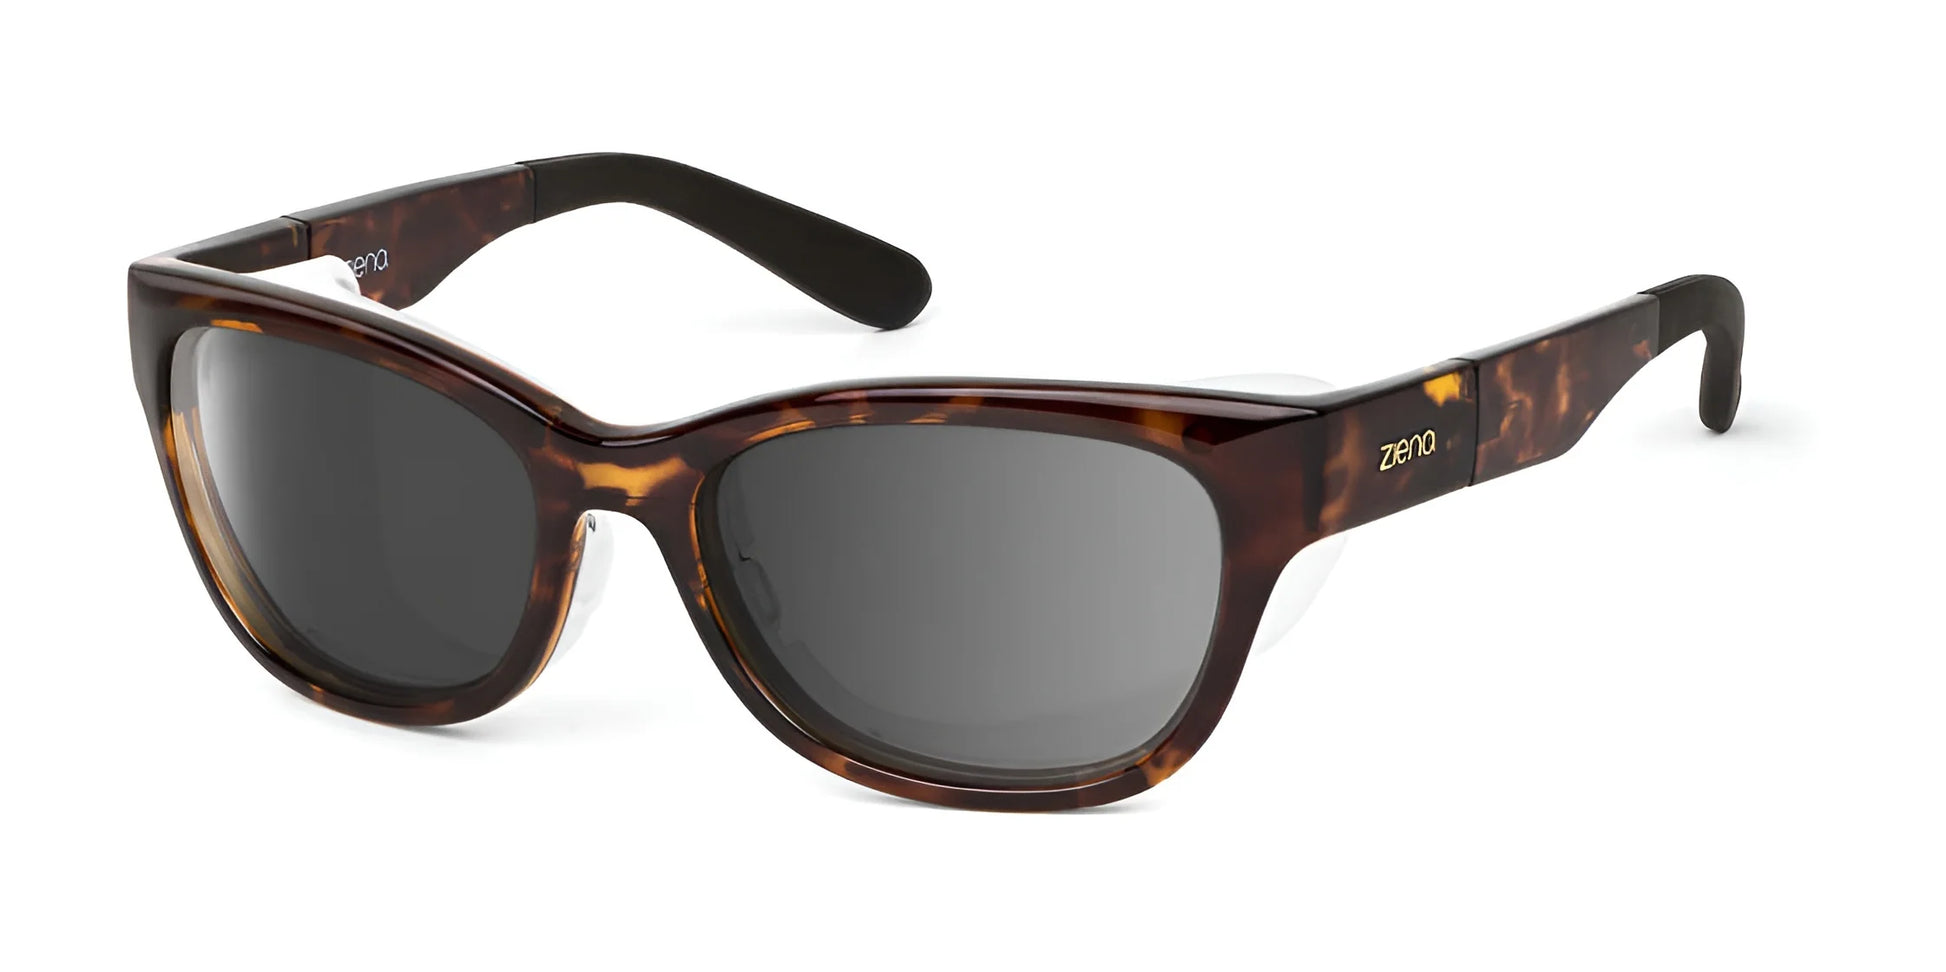 Ziena Marina Sunglasses Tortoise / DARKshift™ Photochromic - Clr to DARK Gray / Frost